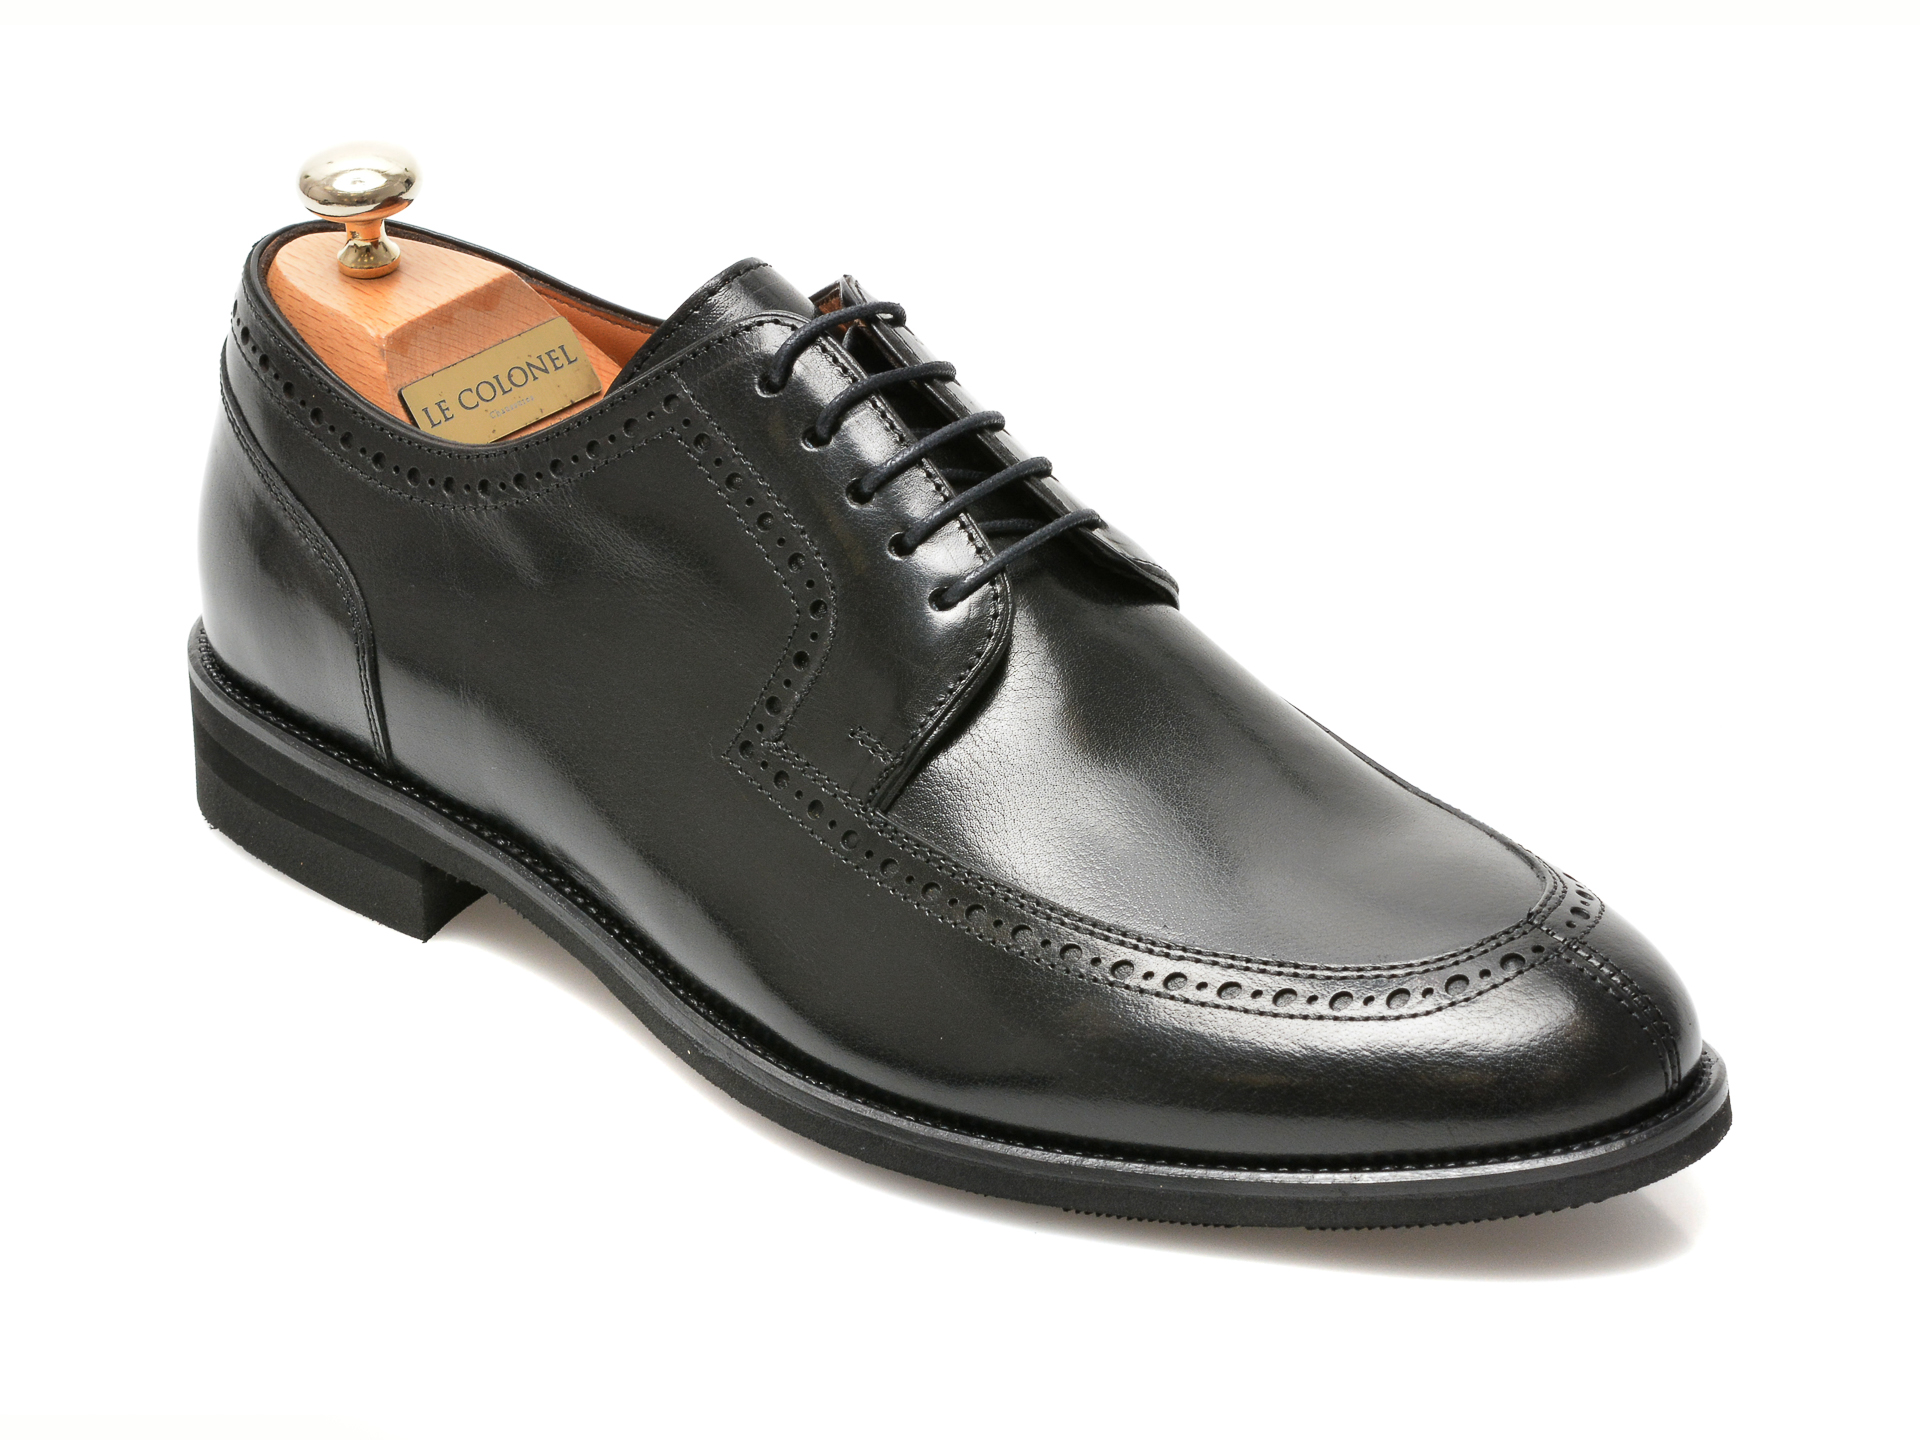 Pantofi LE COLONEL negri, 45279, din piele naturala Le Colonel imagine 2022 13clothing.ro